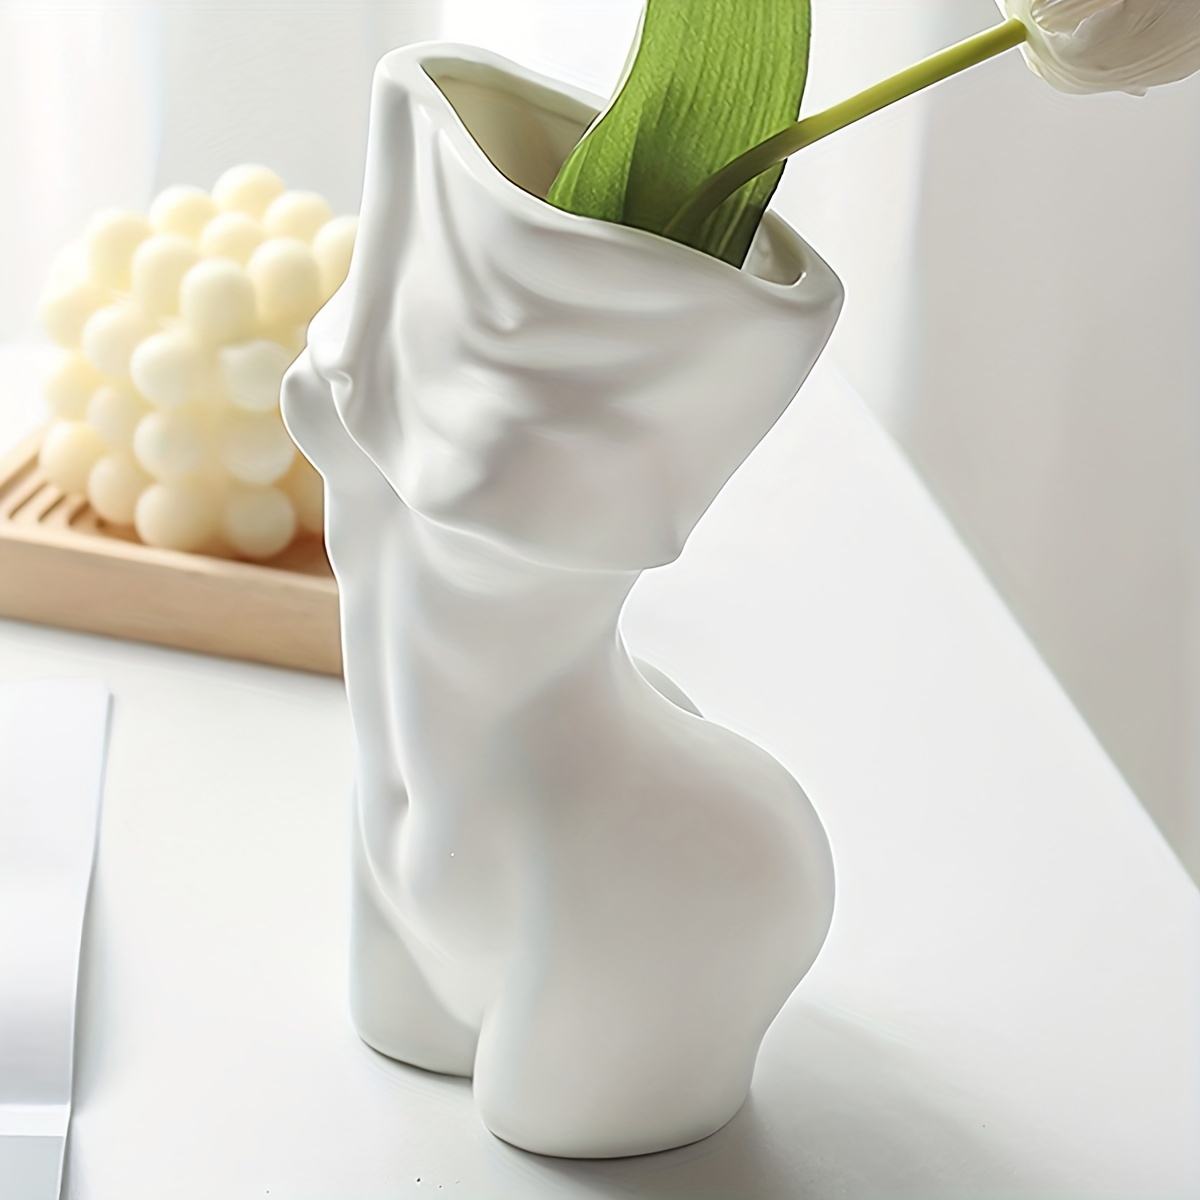  Female Body Vase - Women's Anatomical Form Planter for Flowers,  Plants - Decorative Modern Indoor Pot for Home, Office, Bedroom, Bathroom -  Boho Chic Feminist Decor & Statue Sculpture : Home & Kitchen